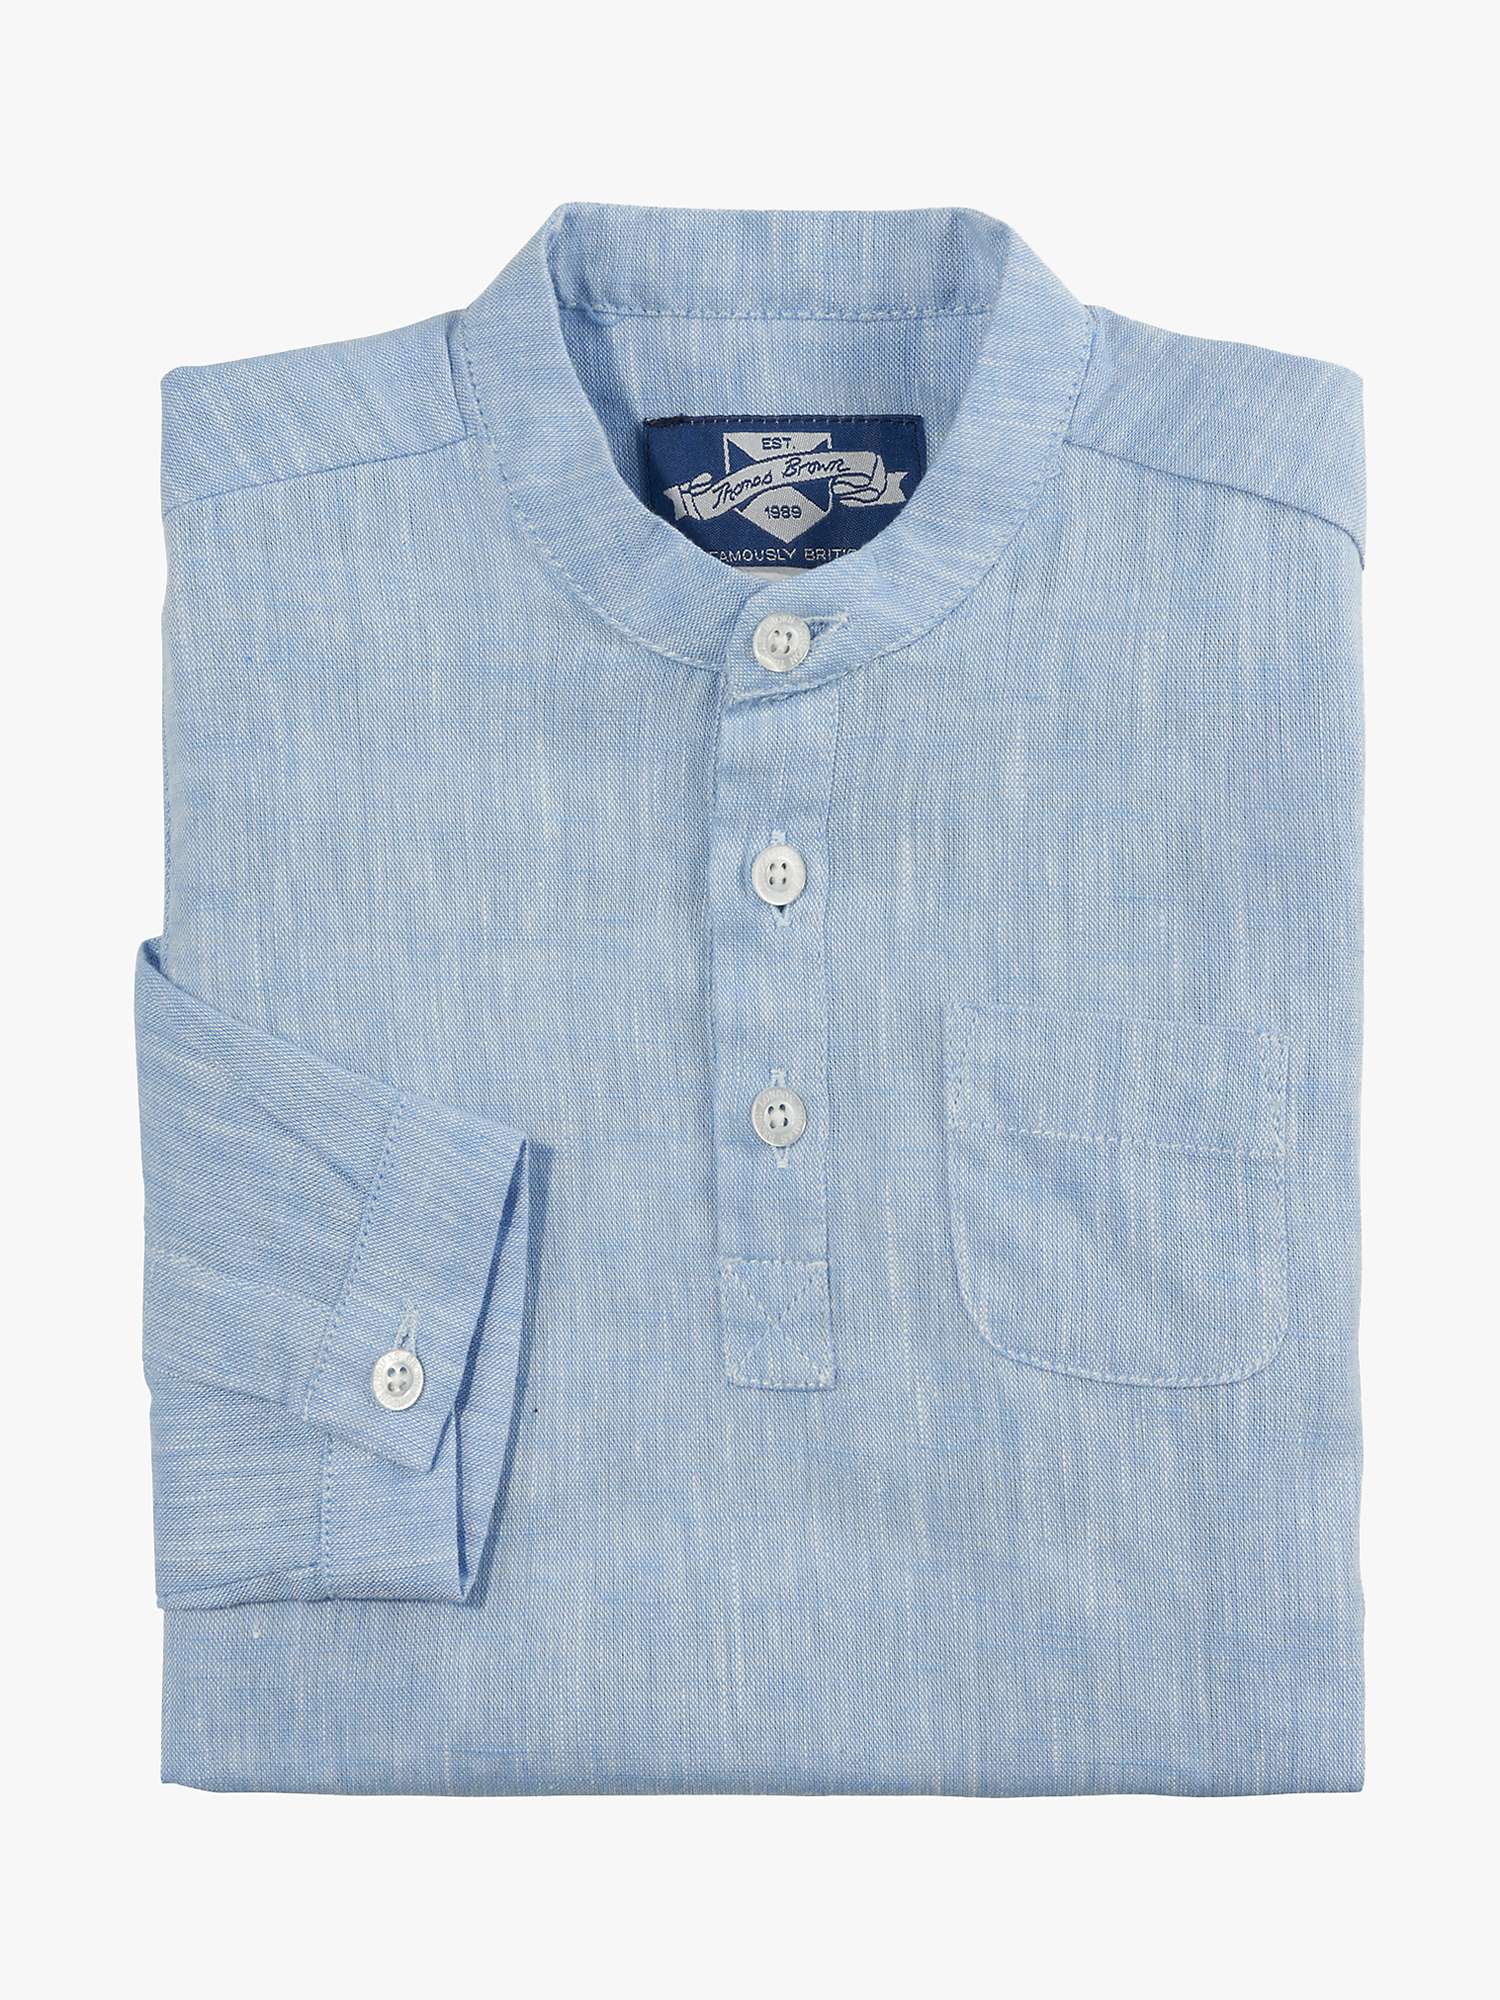 Buy Trotters Baby Oscar Cotton Shirt, Pale Blue Online at johnlewis.com